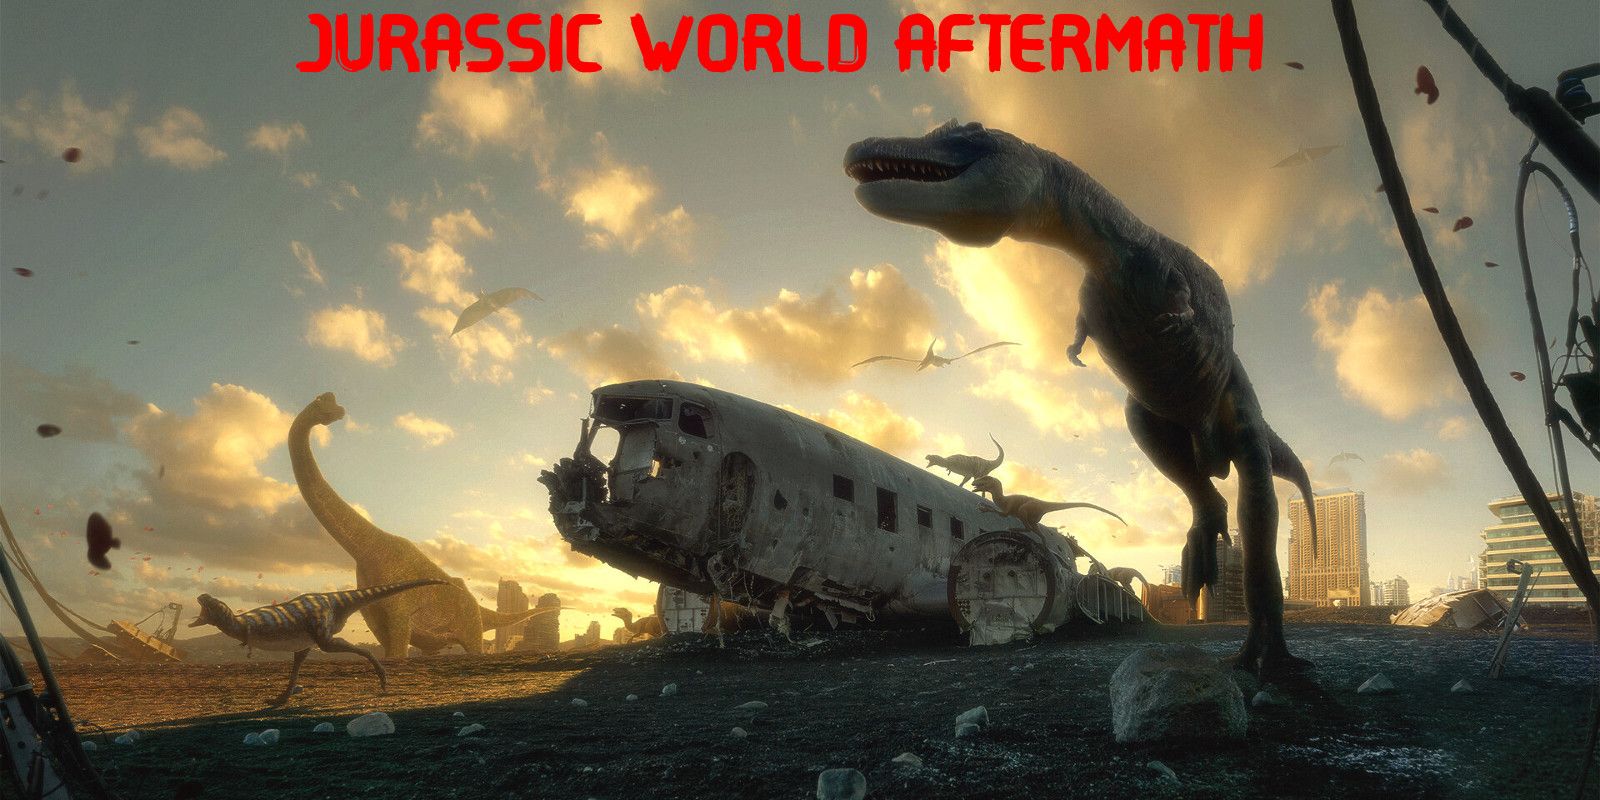 download jurassic world aftermath psvr 2 for free